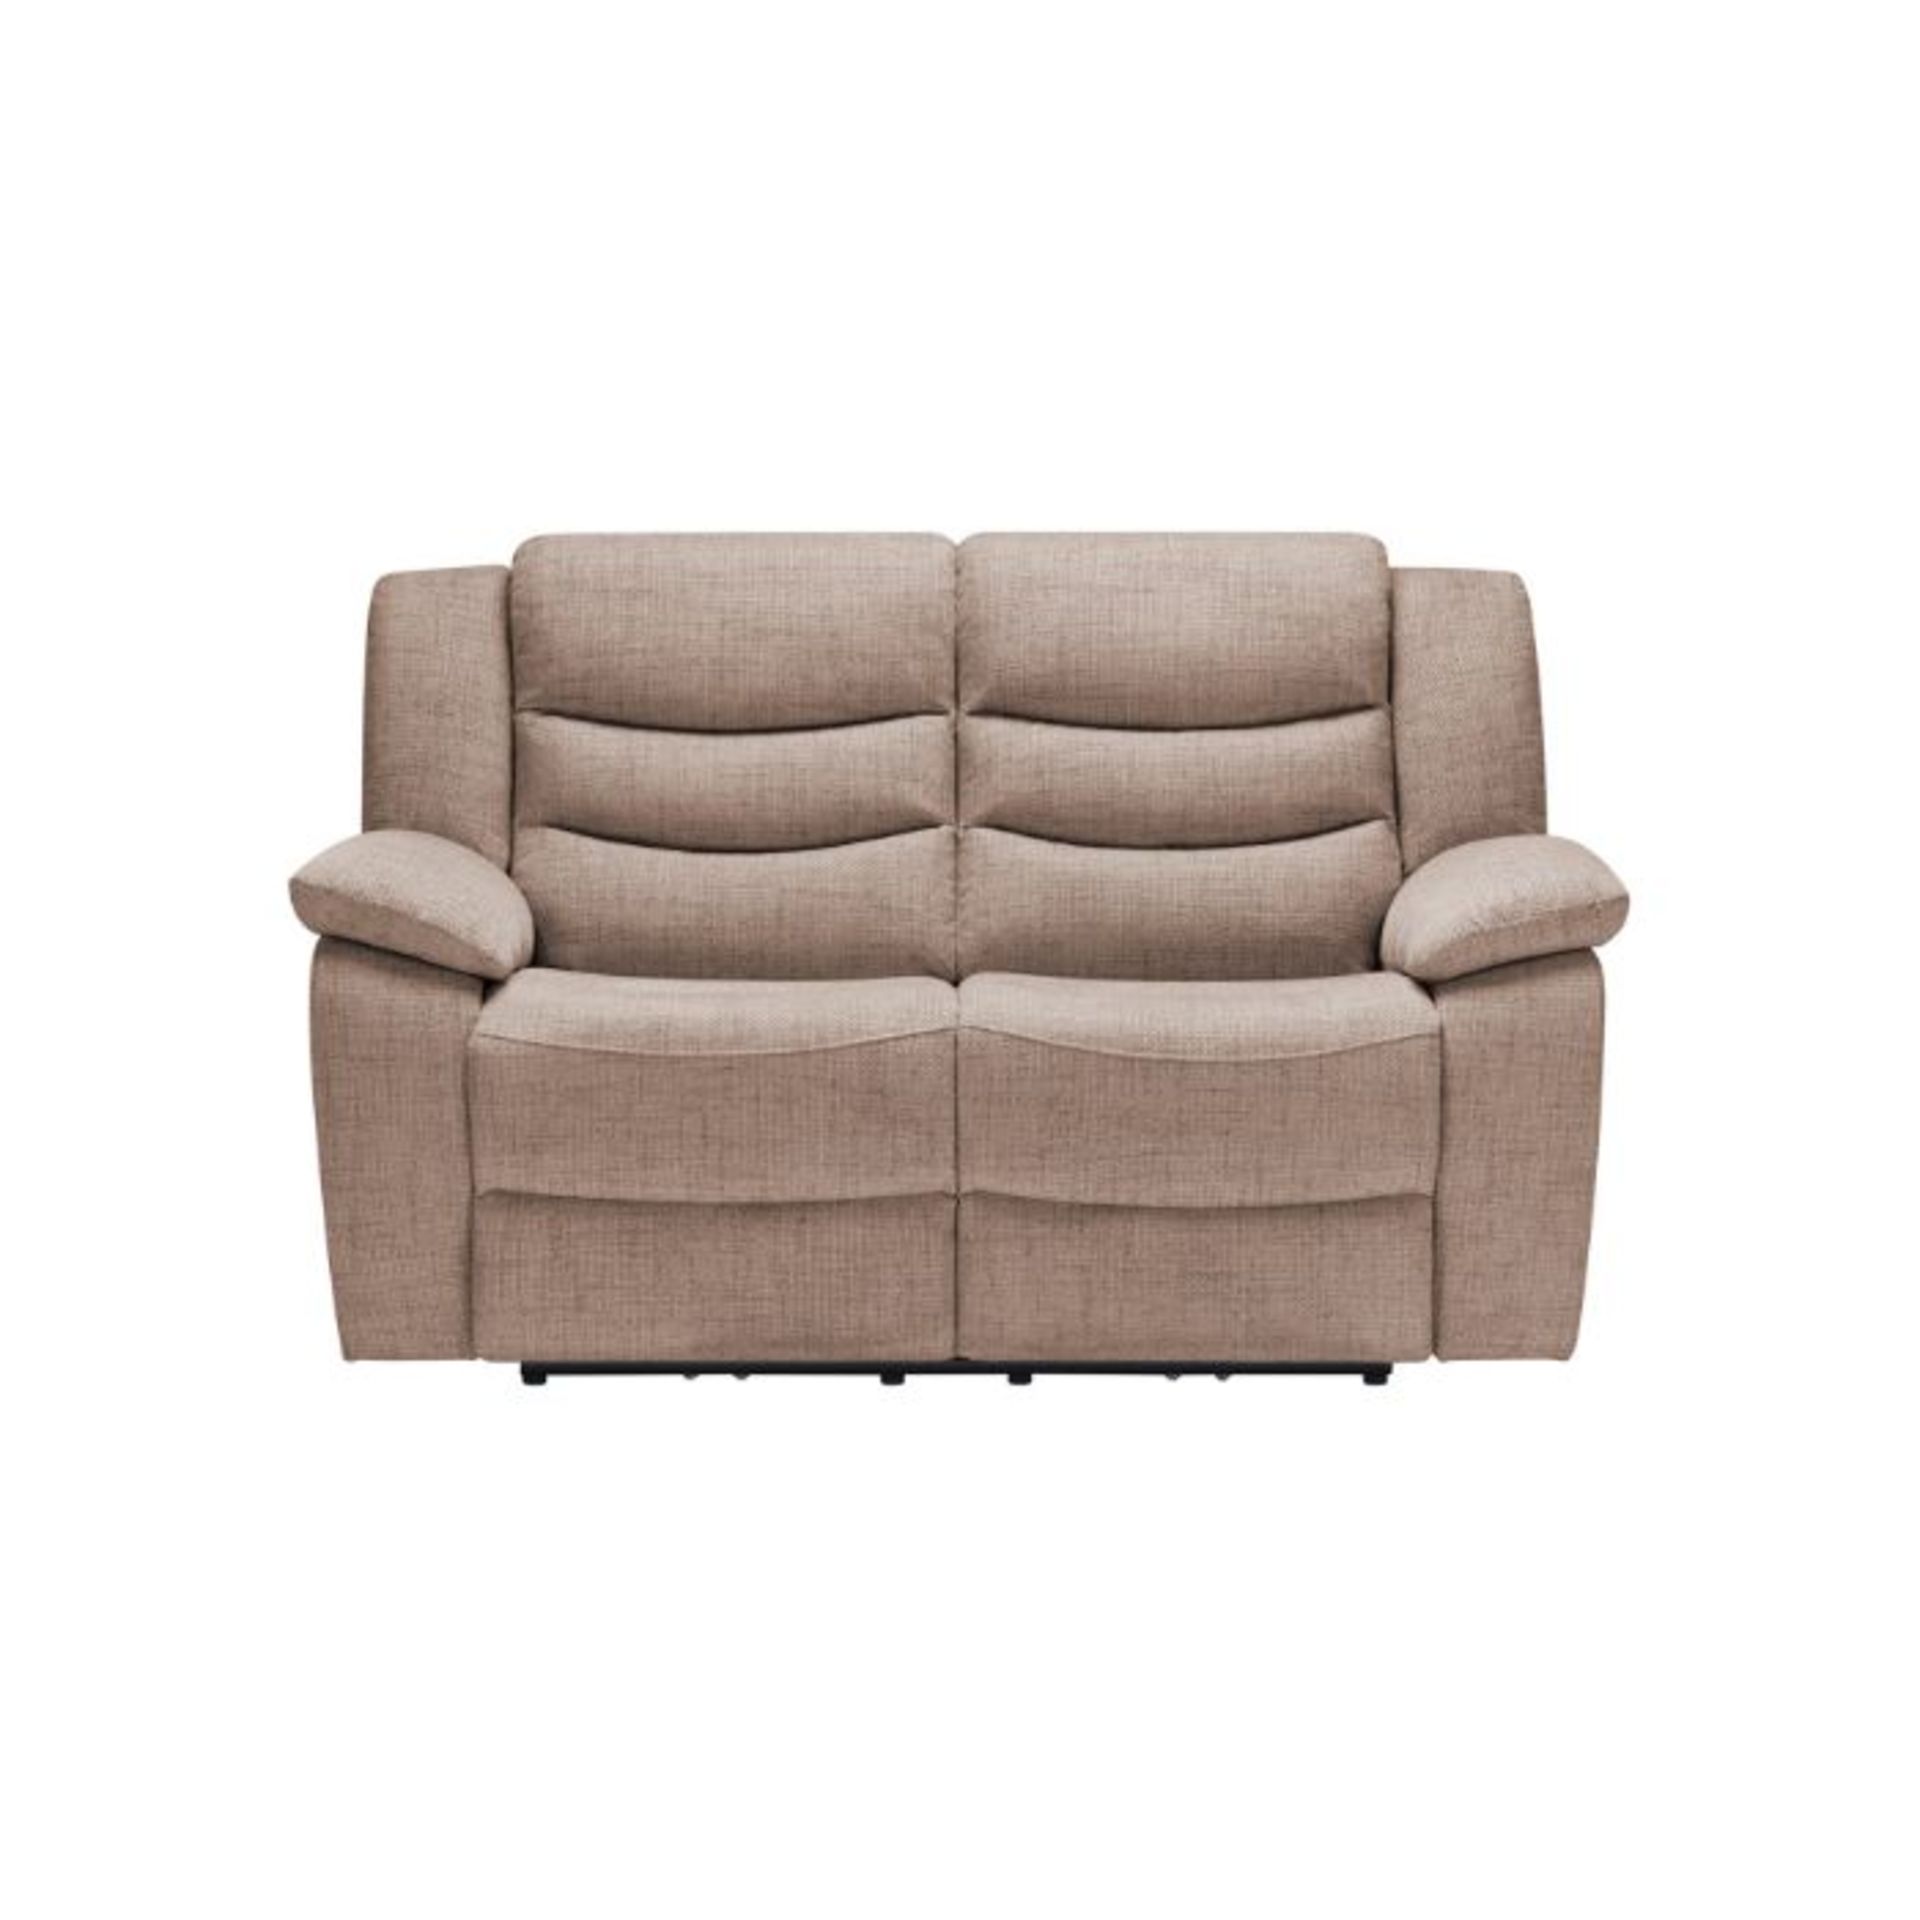 Oak Furnitureland Marlow 2 Seater Sofa In Dorset Beige Fabric RRP ?849.99 Our Marlow range is - Image 2 of 4